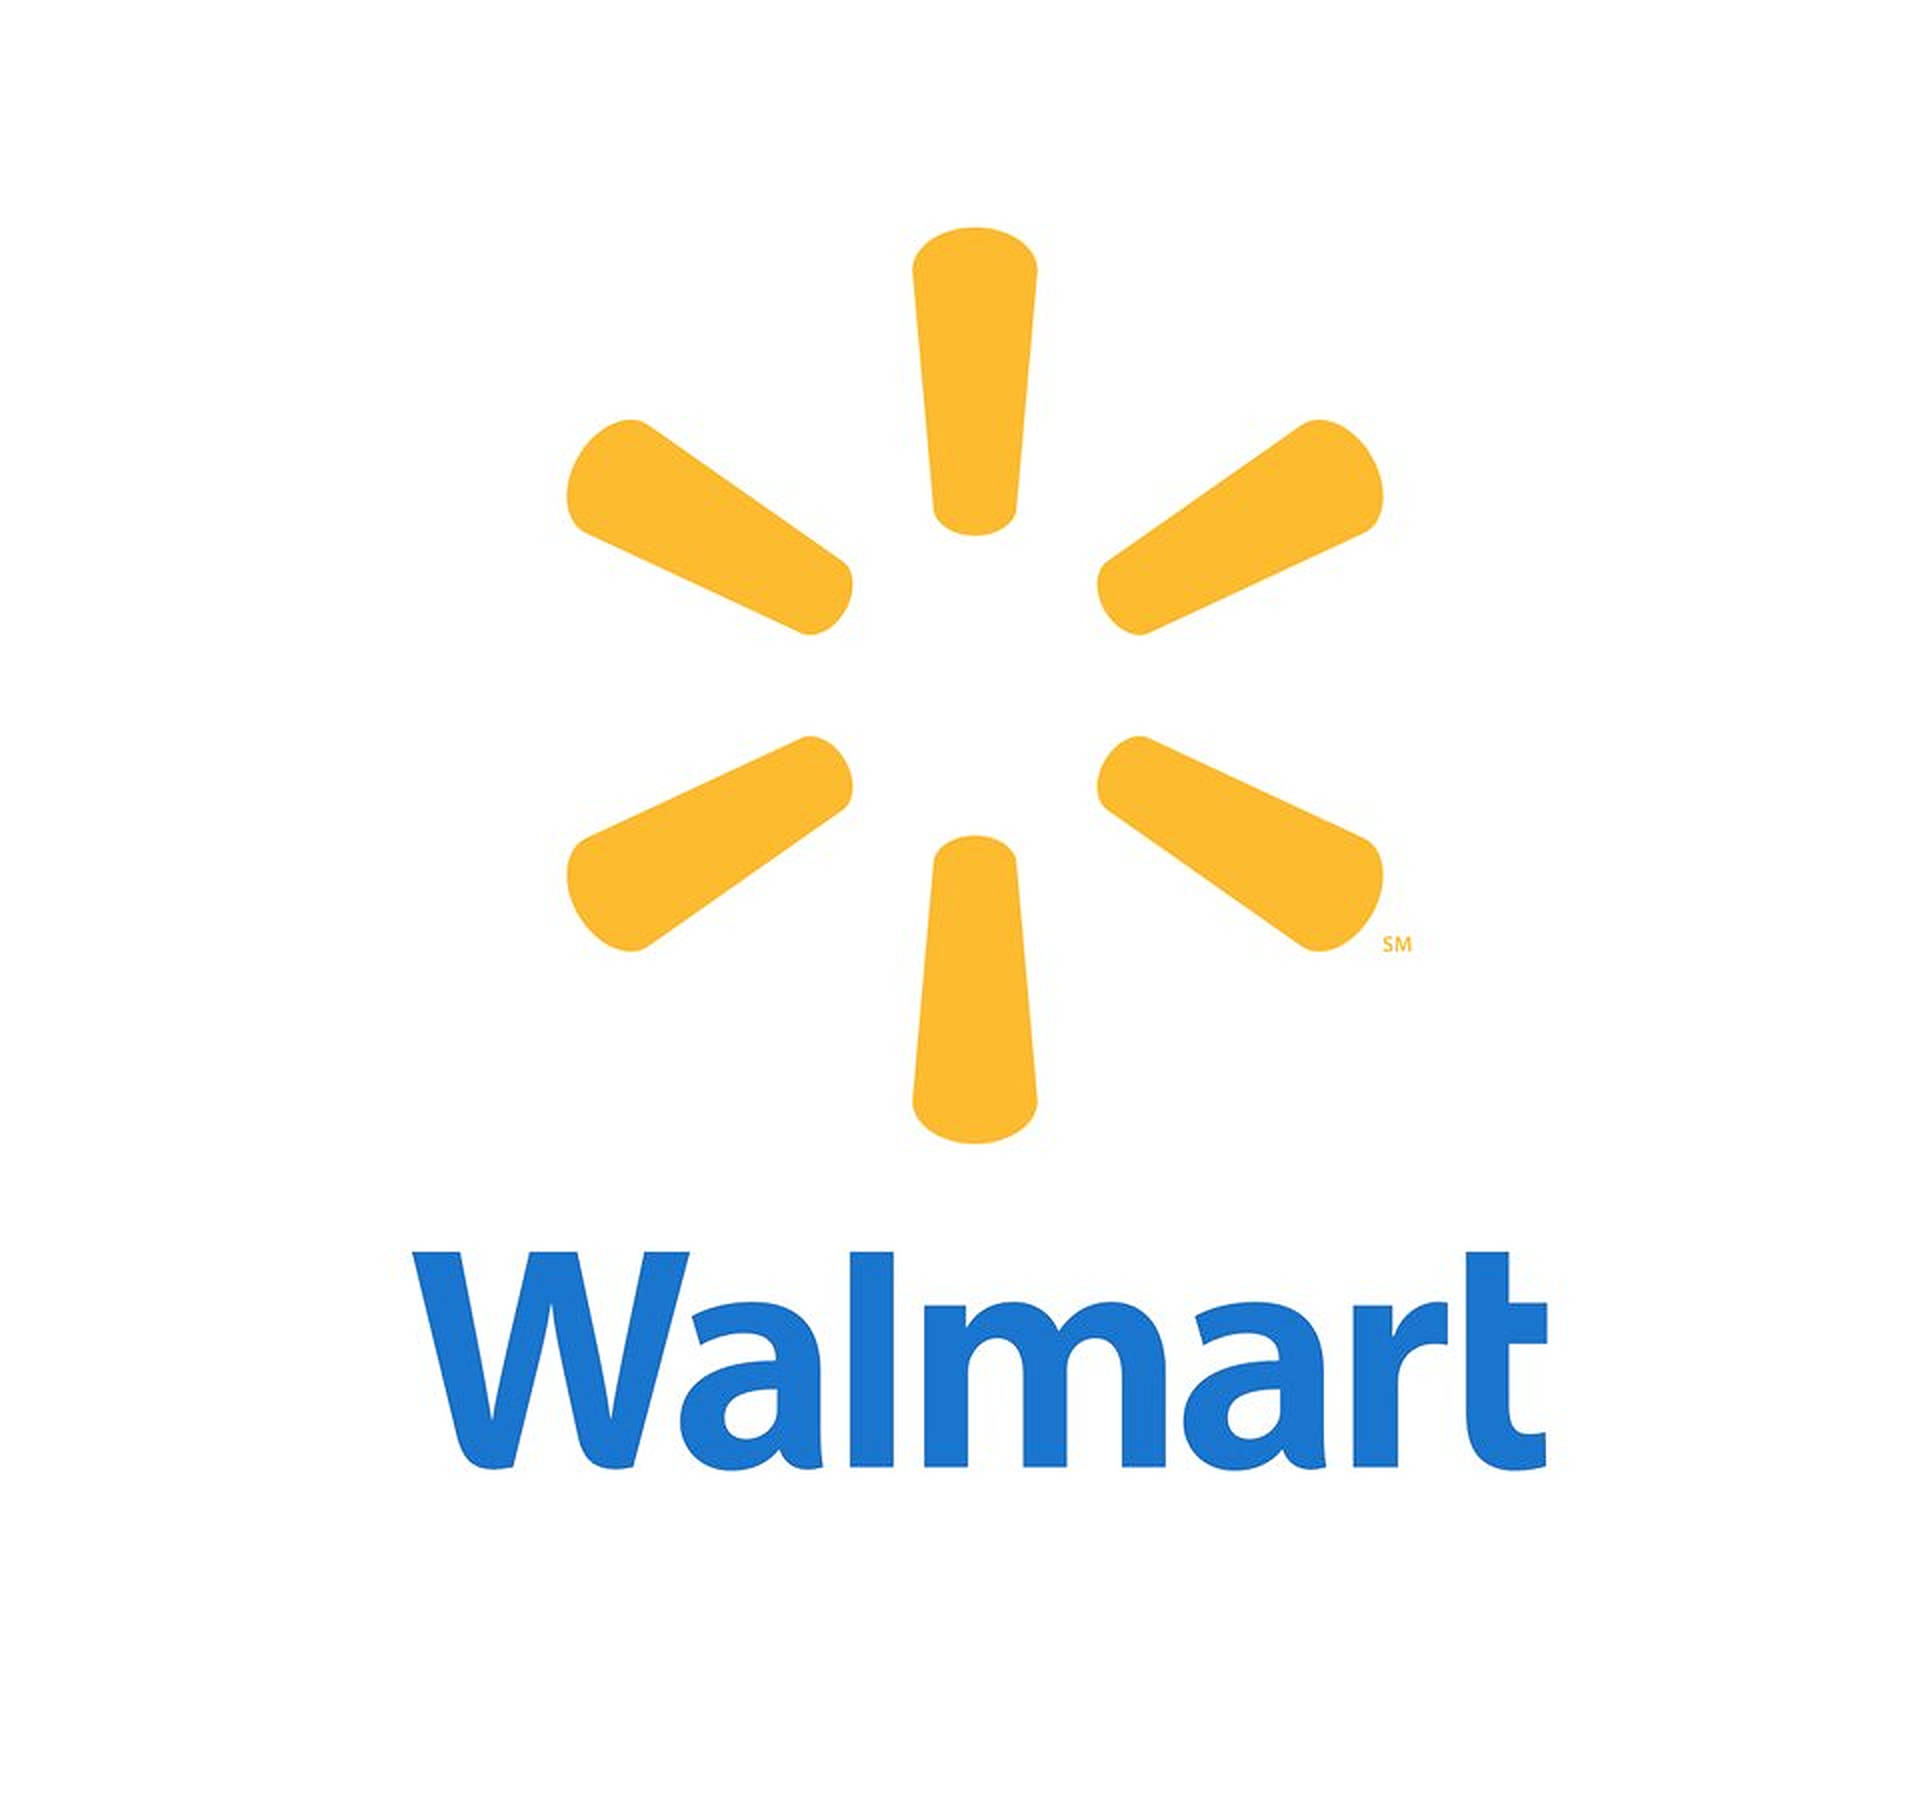 Walmart Retail Company Background